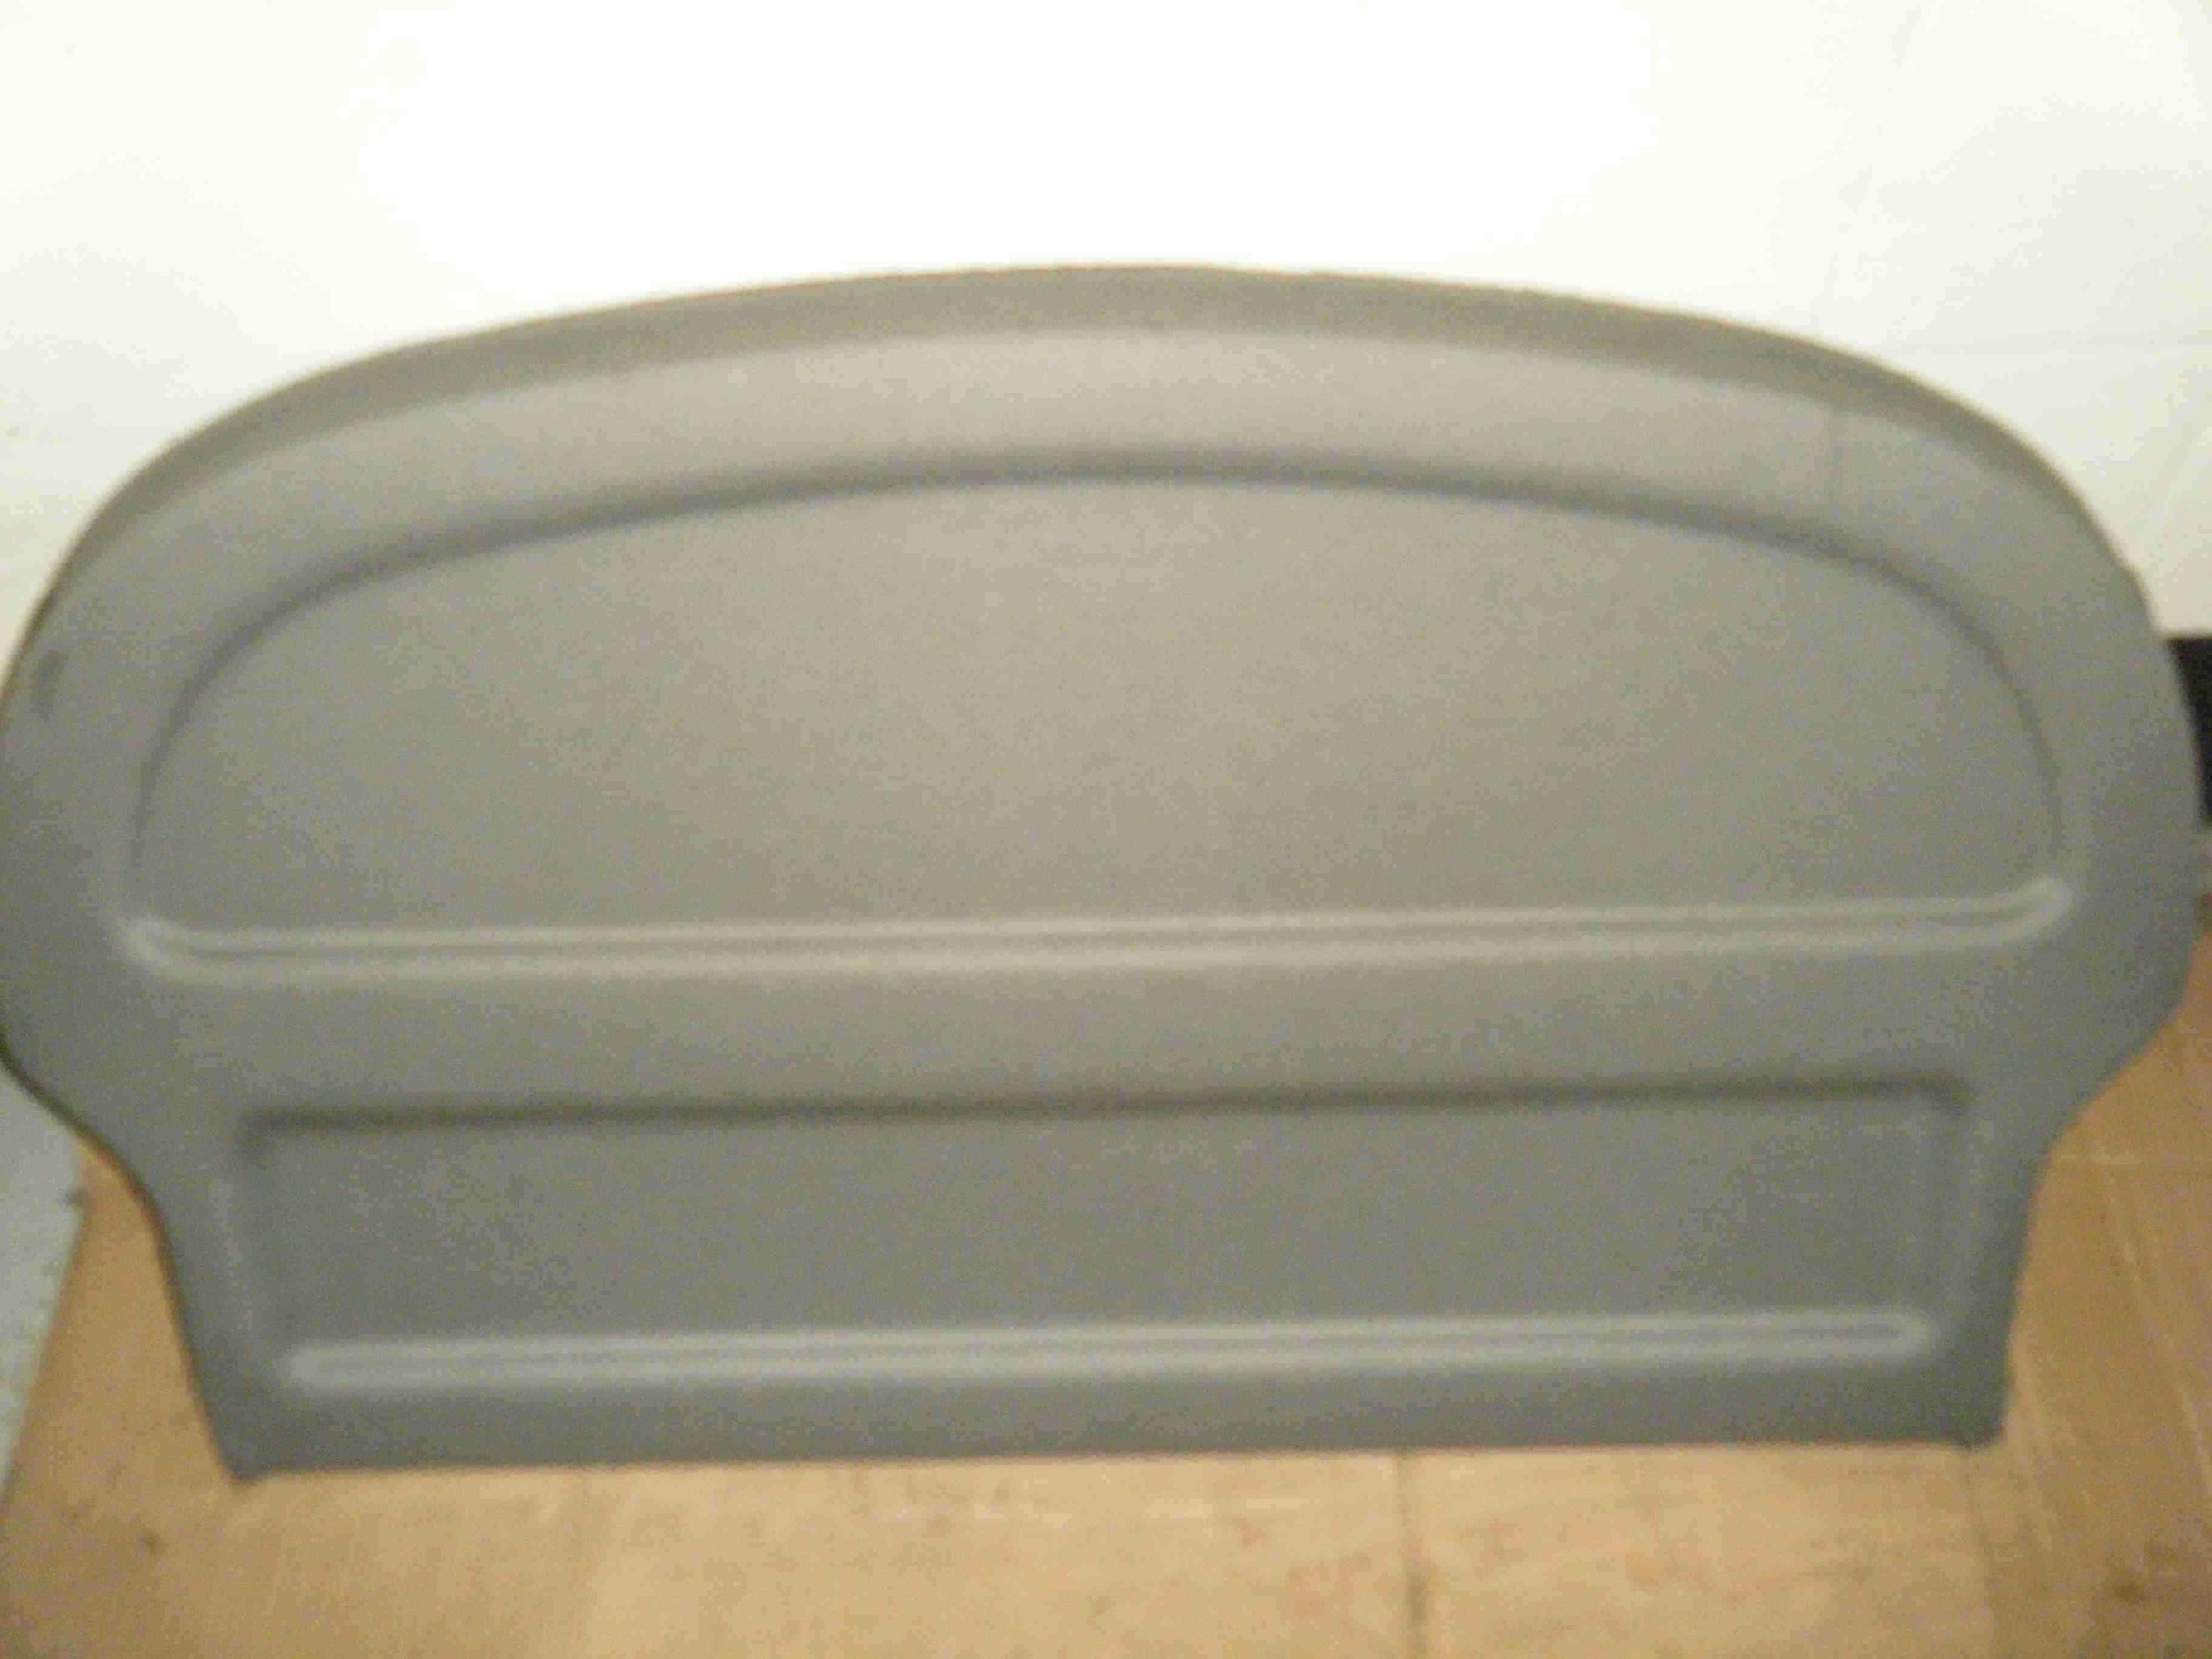 Renault Laguna 2001-2005 Parcel Shelf Tray Light Grey